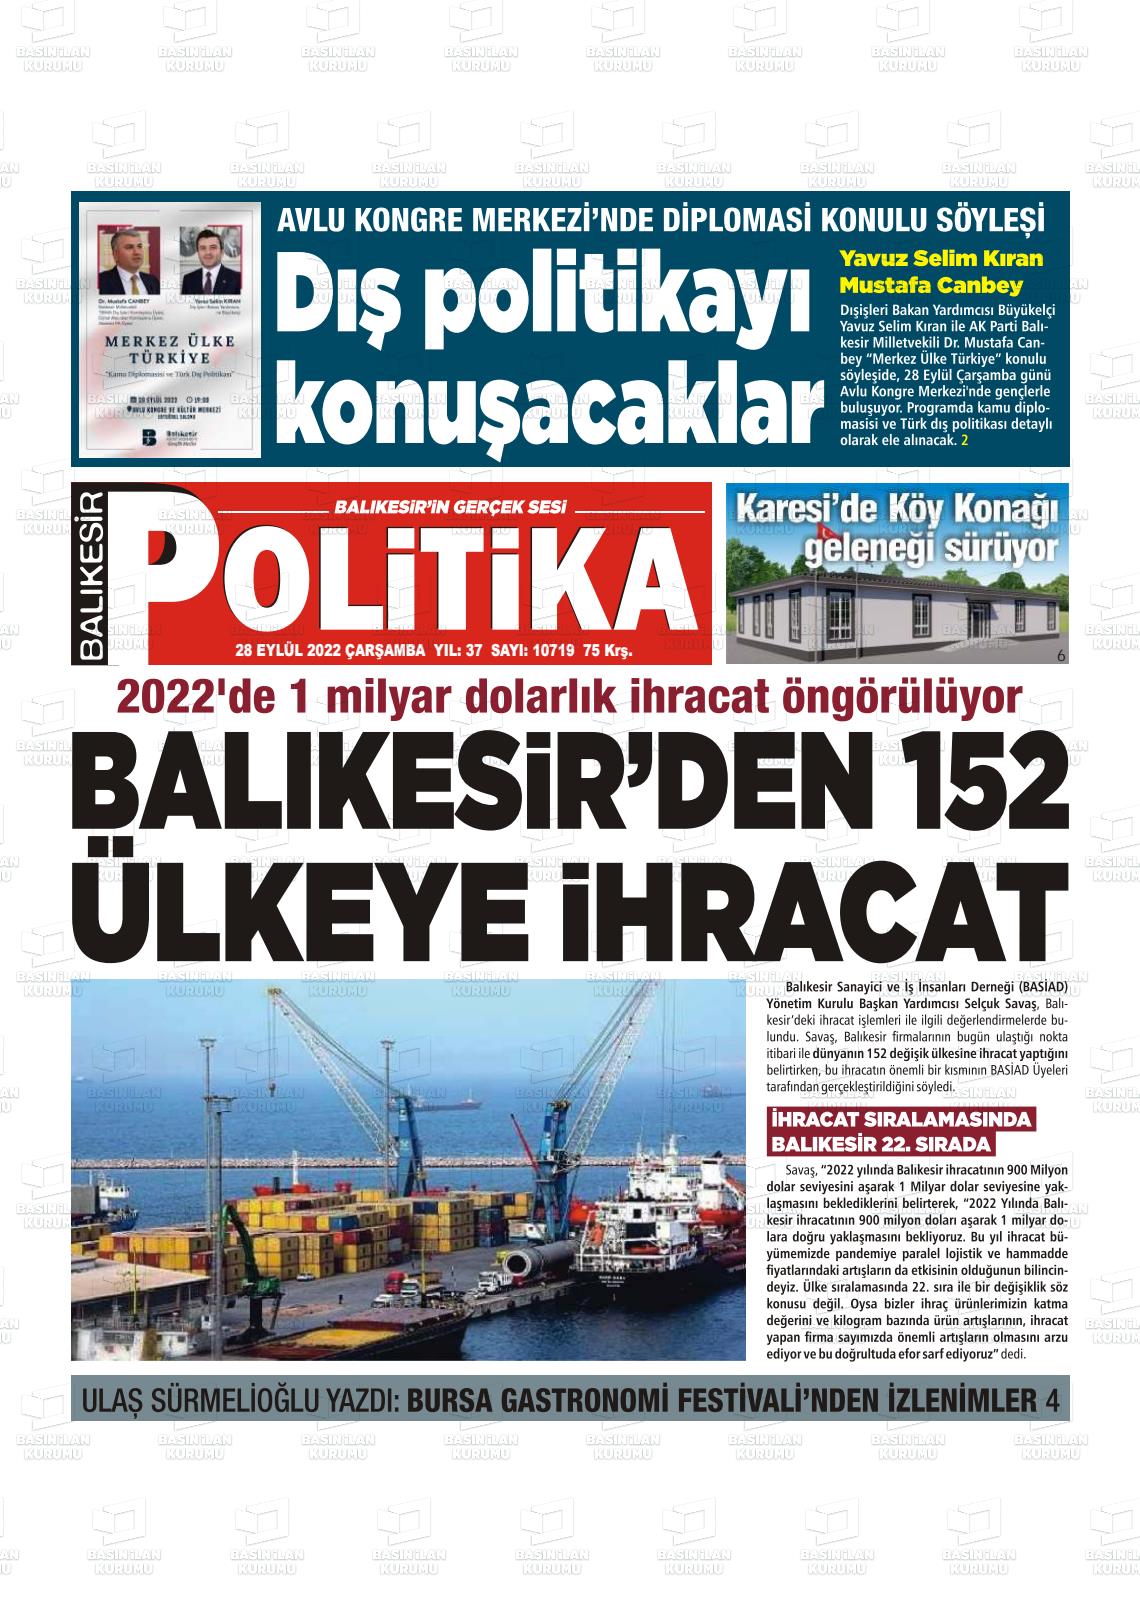 28 Eylül 2022 Balıkesir Politika Gazete Manşeti